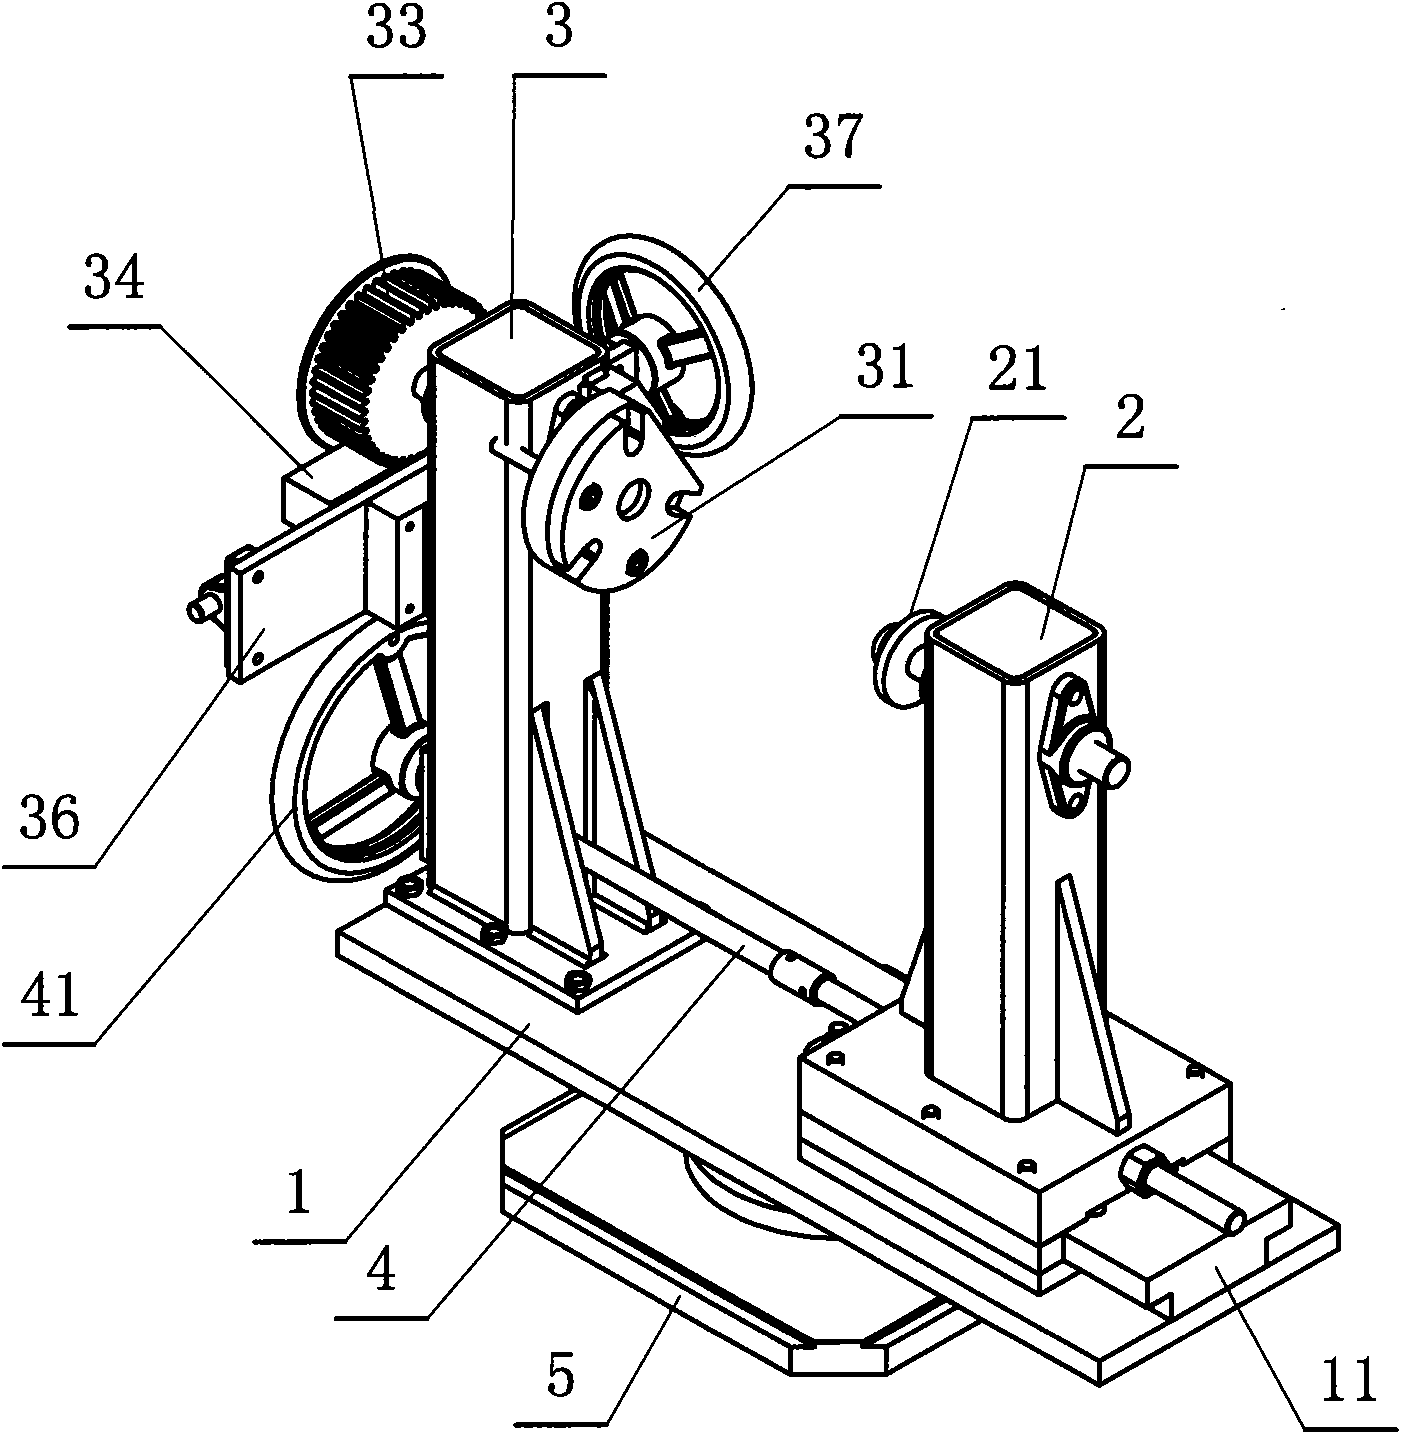 Semi-automatic mounting pump tooling platform